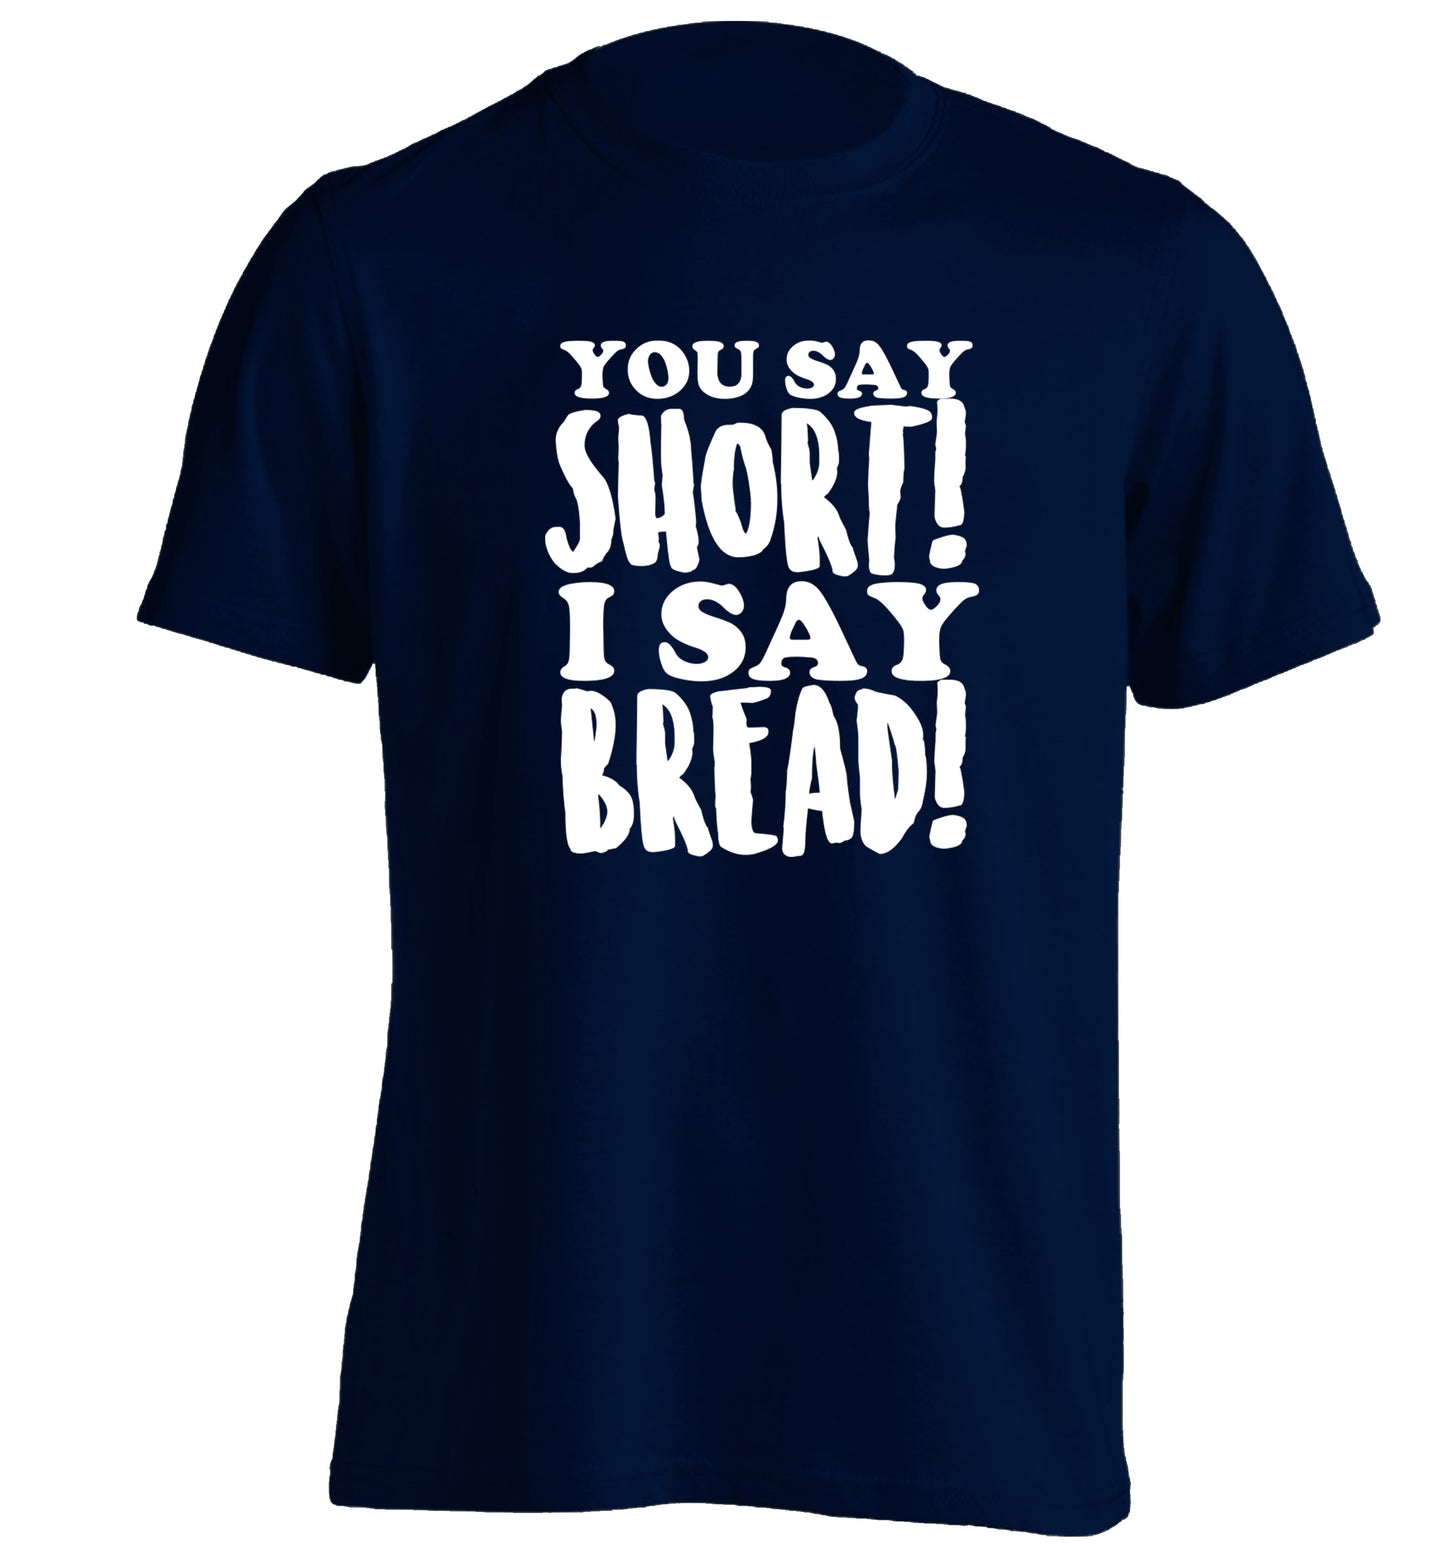 You say short I say bread! adults unisex navy Tshirt 2XL